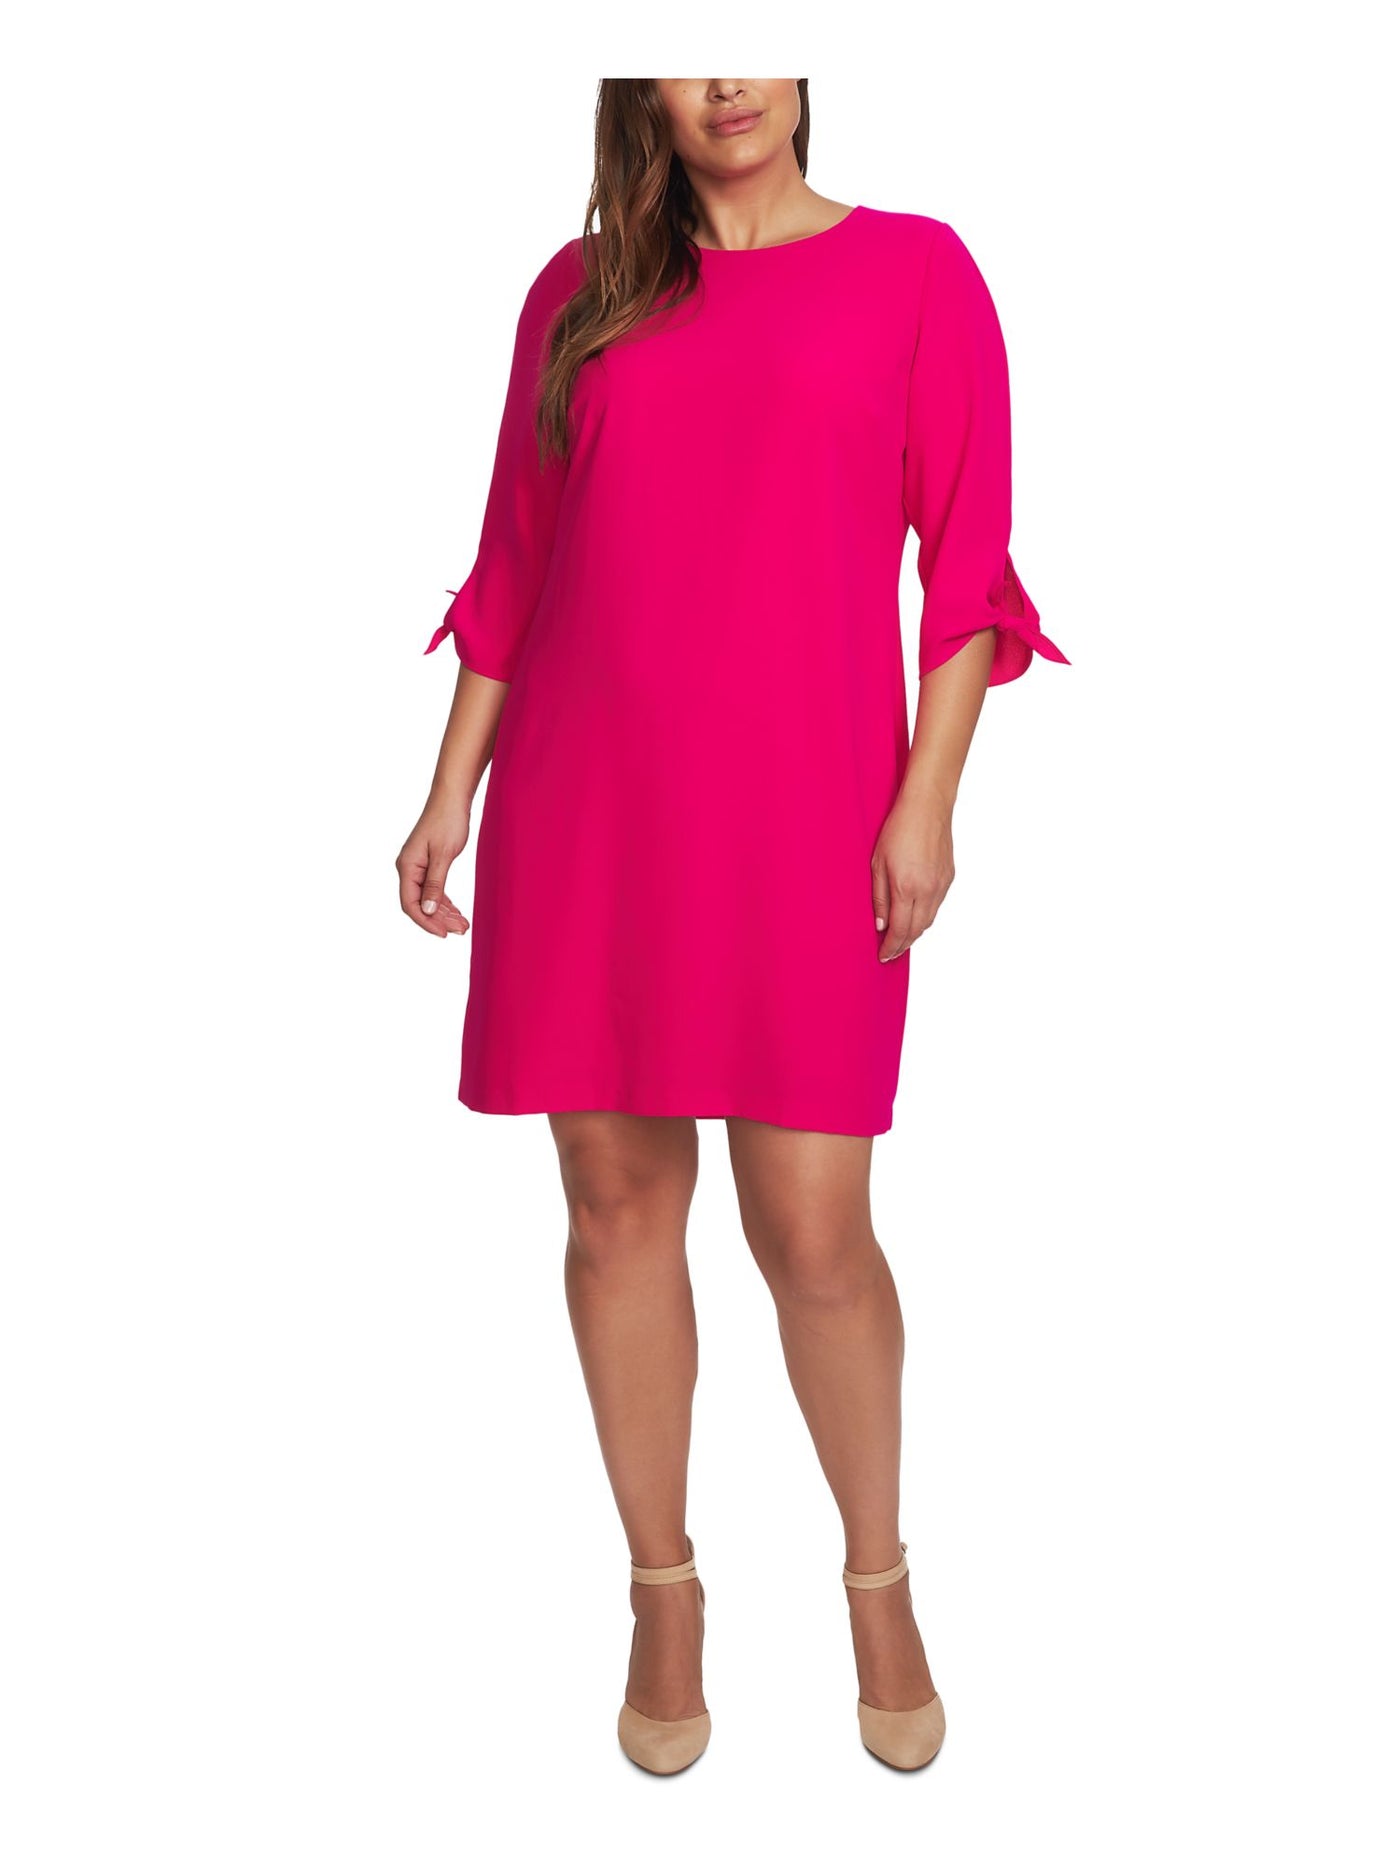 CECE Womens Pink Zippered 3/4 Sleeve Jewel Neck Top 0